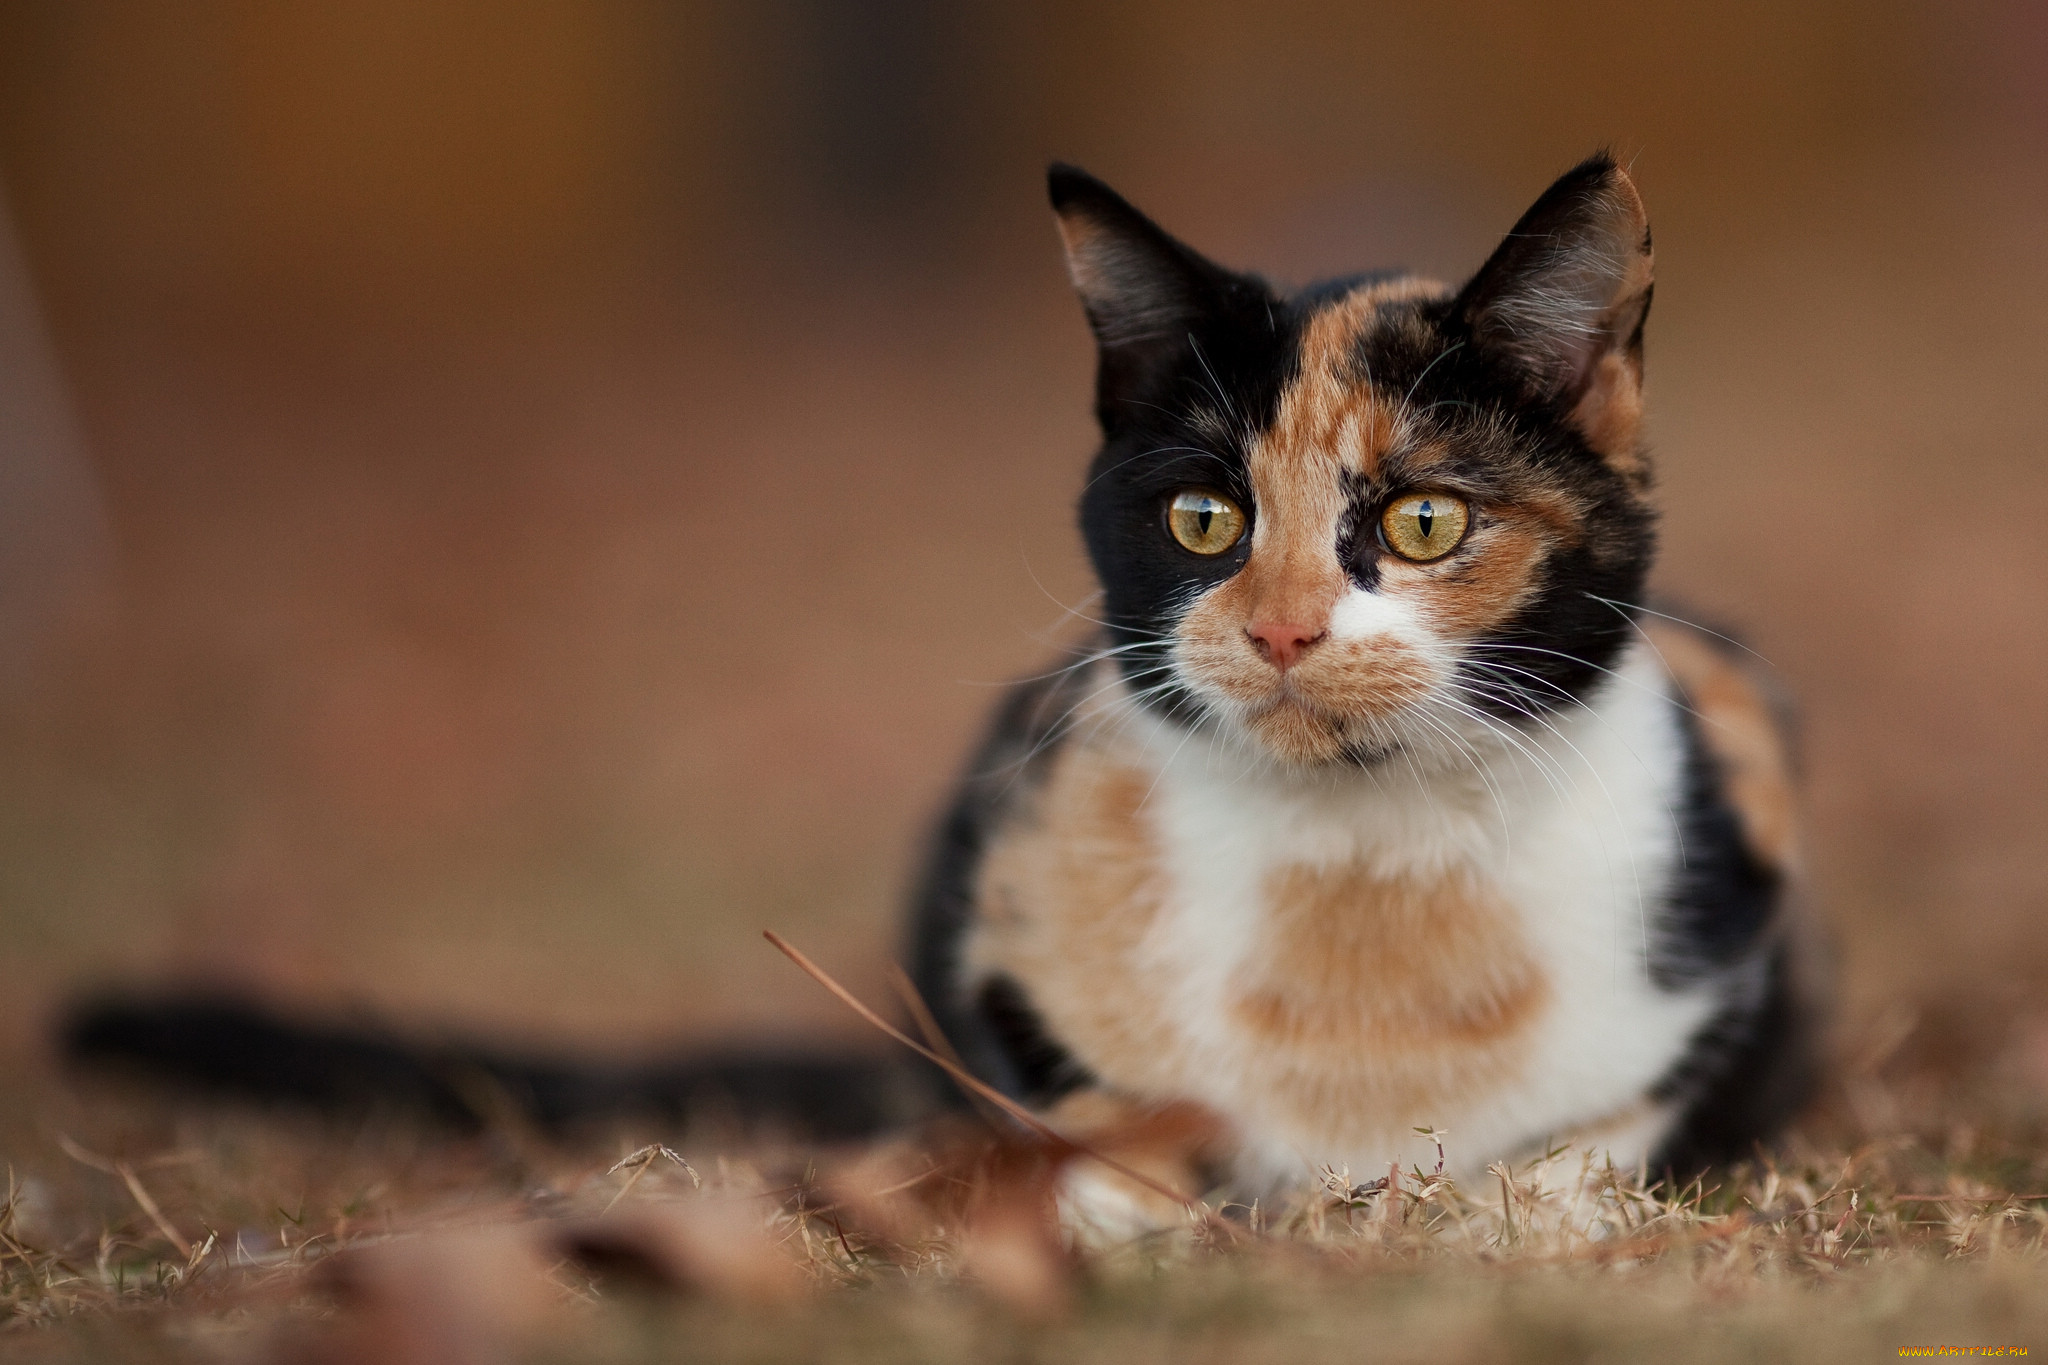 Cats img. Трехшерстная кошка порода. Порода Калико. Эгейская кошка трехцветная. Кошка породы Калико.